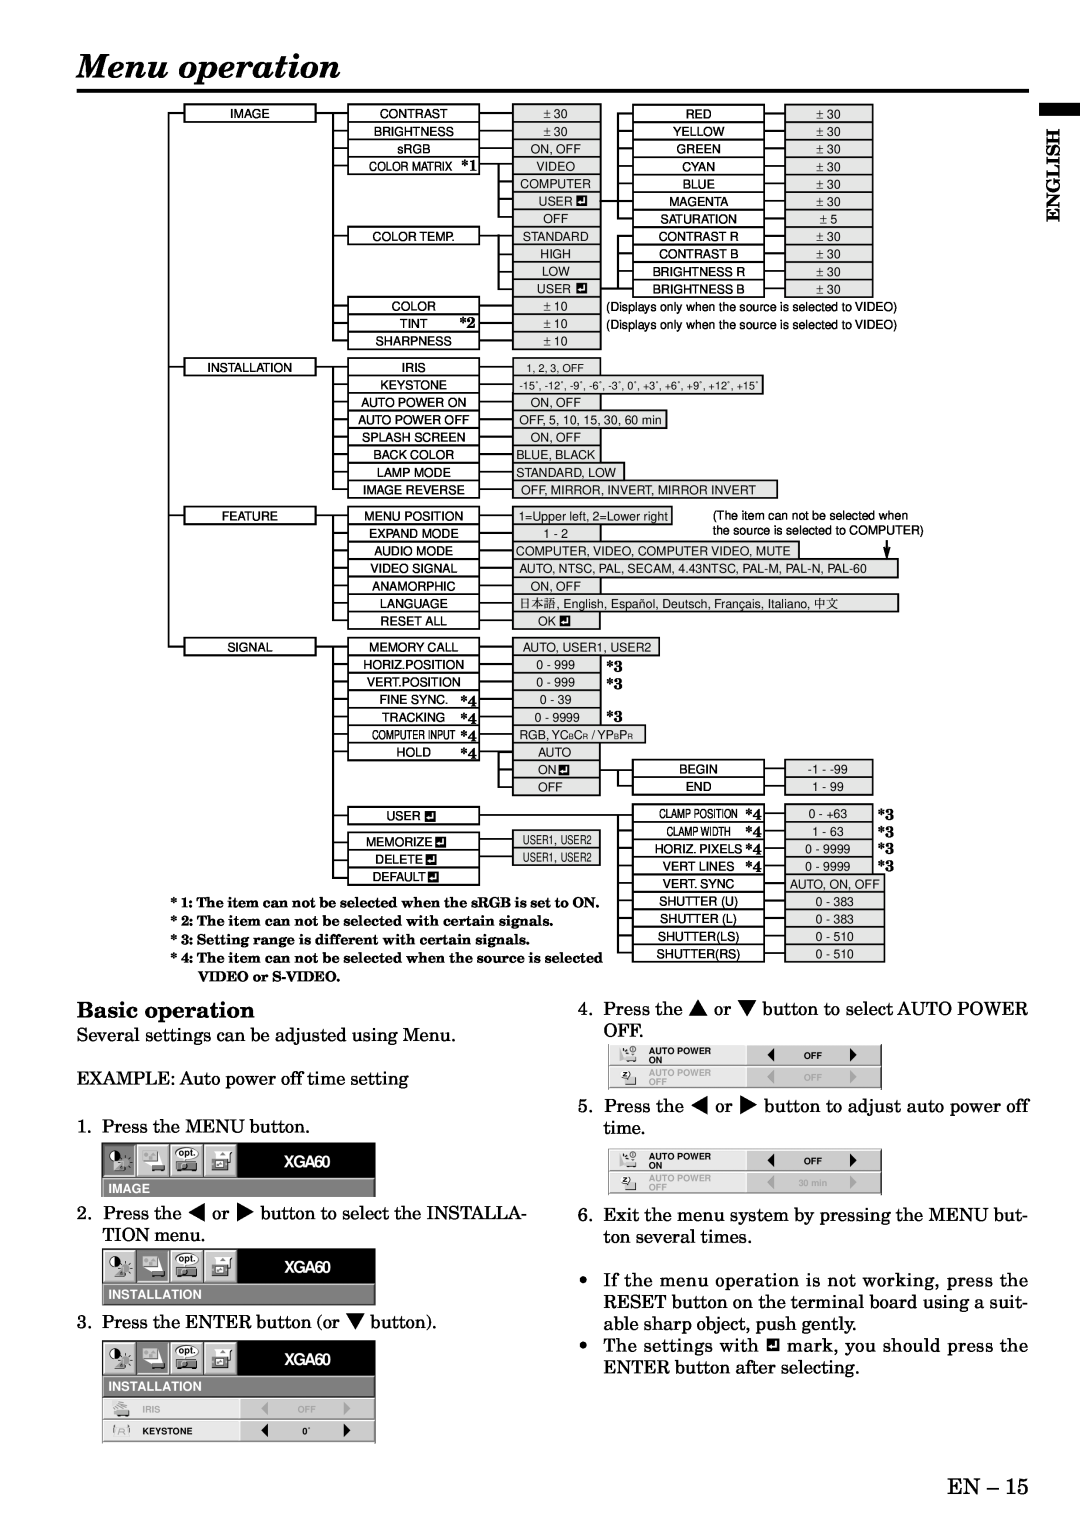 Mitsubishi Electronics XL1U user manual Menu operation, Basic operation 